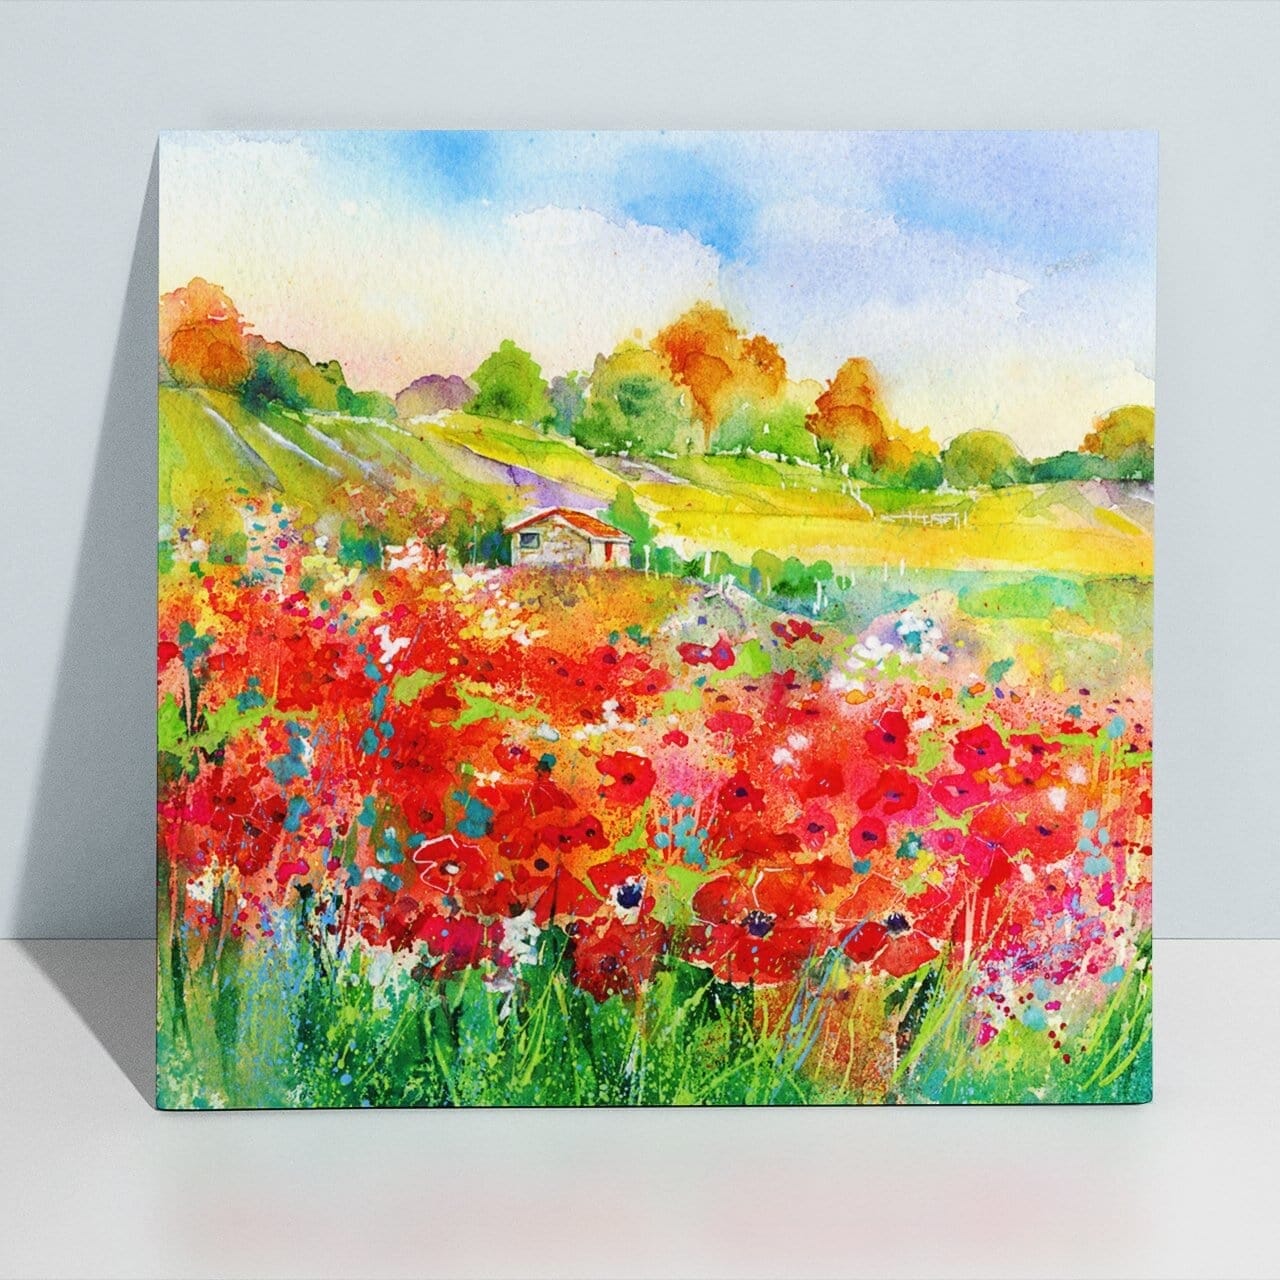 Poppy Field - Landscape Canvas Art Print designed by artist Sheila Gill
